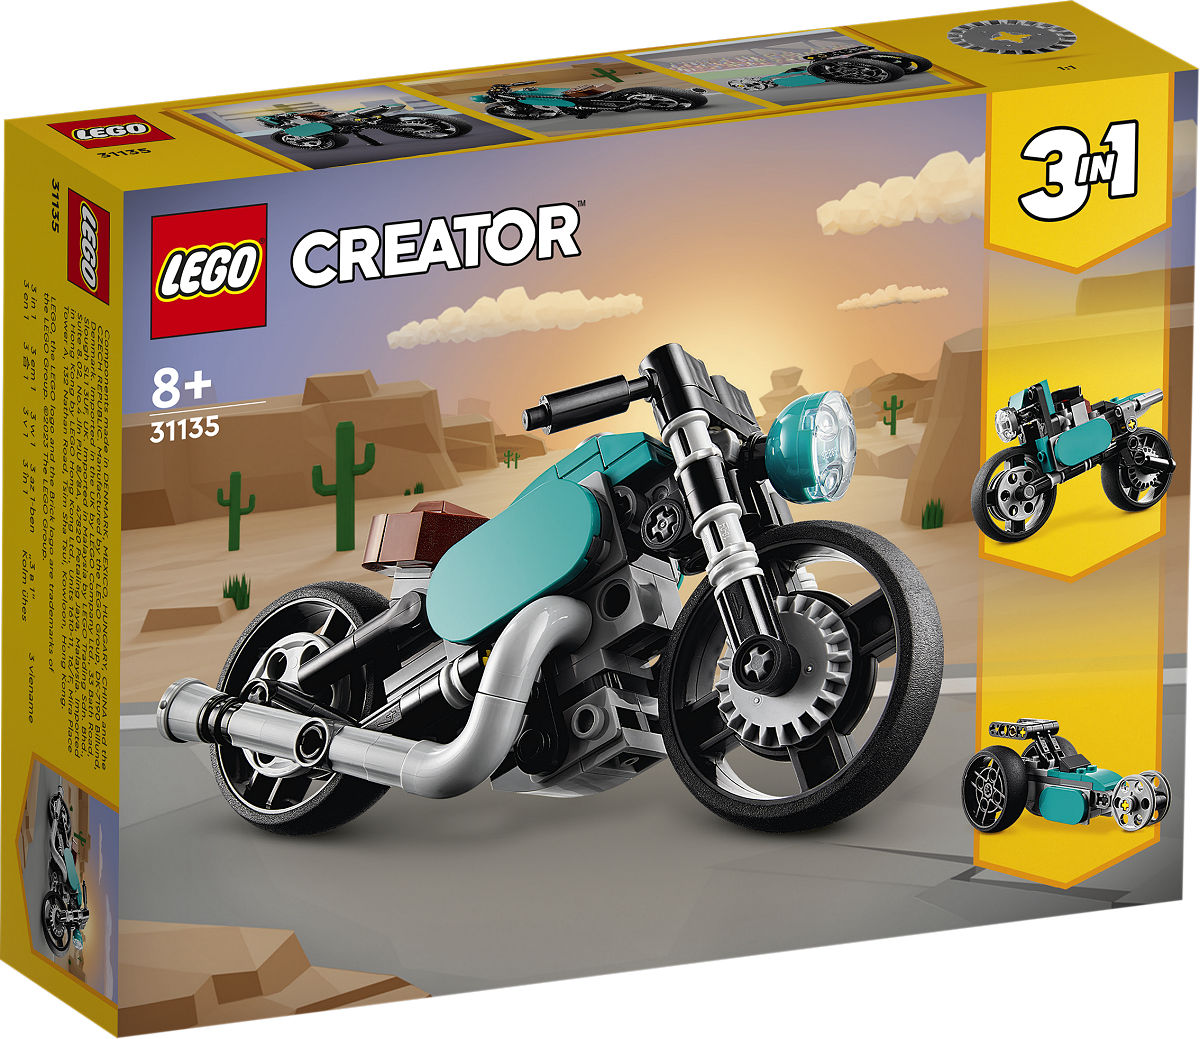 LEGO CREATOR 31135 KLASSIEKE MOTOR - 5702017415888 - 531208